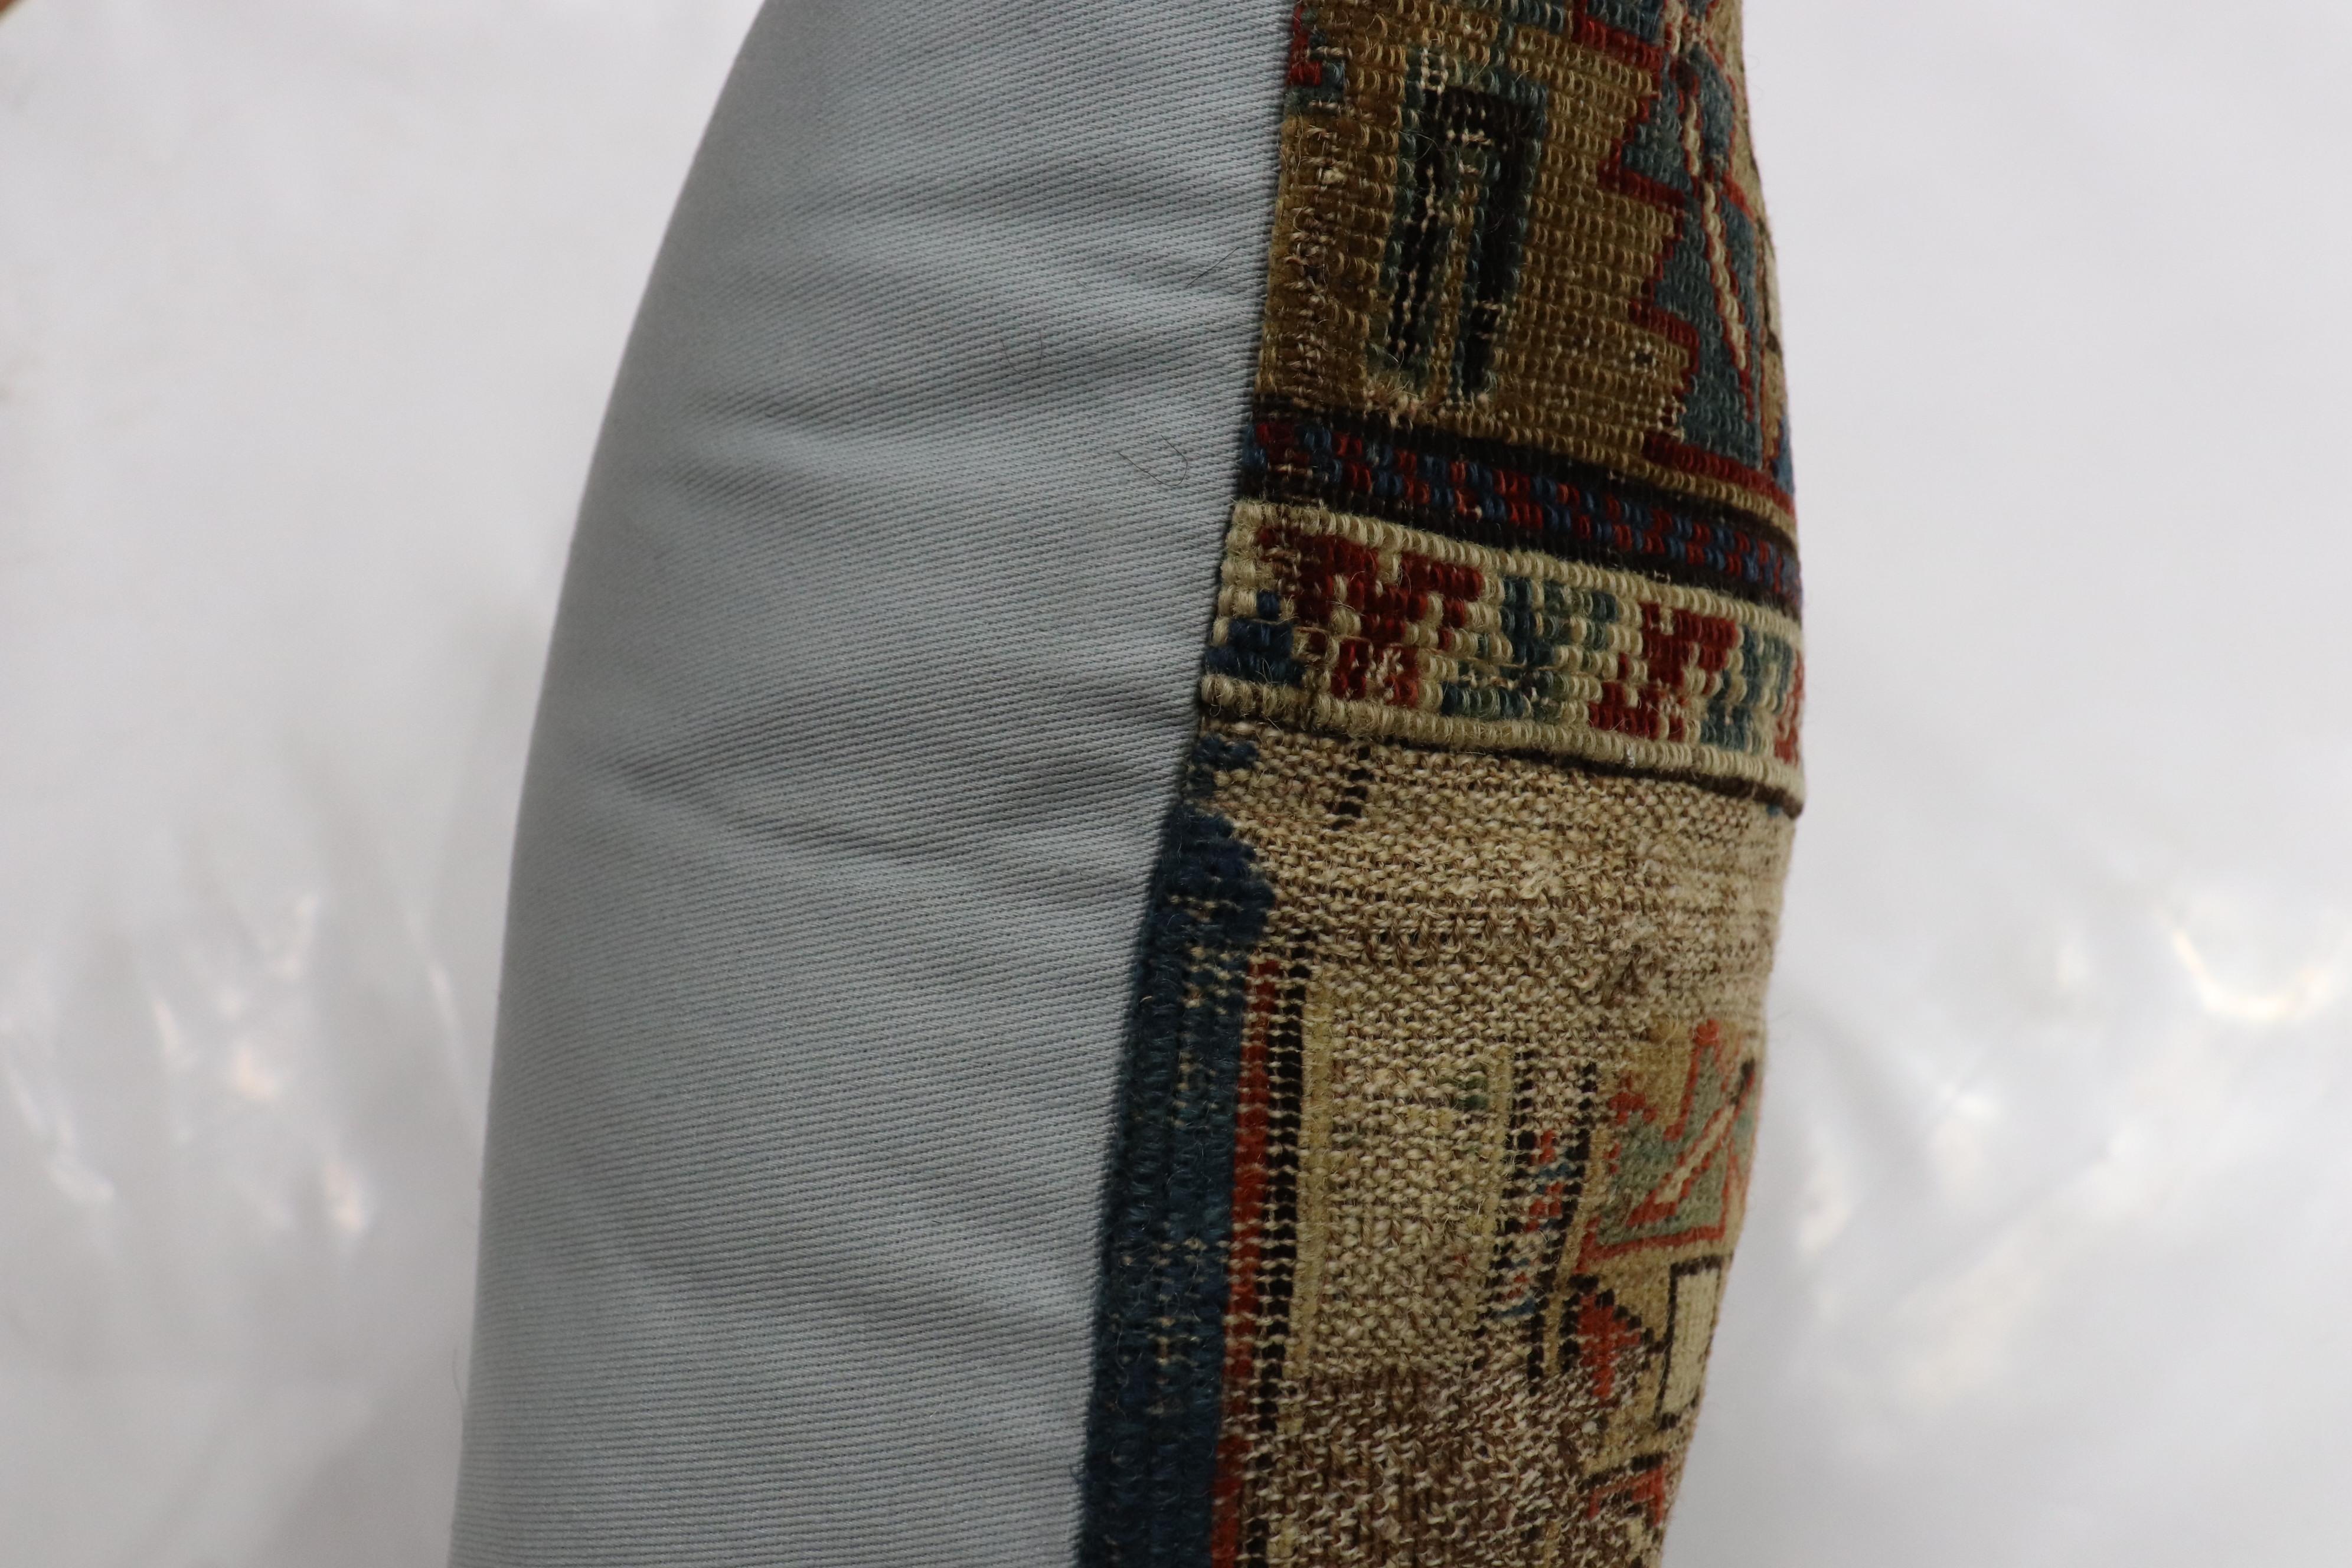 Zabihi Kollektion 19. Jahrhundert Kaukasisches Teppich-Kissen im Zustand „Gut“ im Angebot in New York, NY